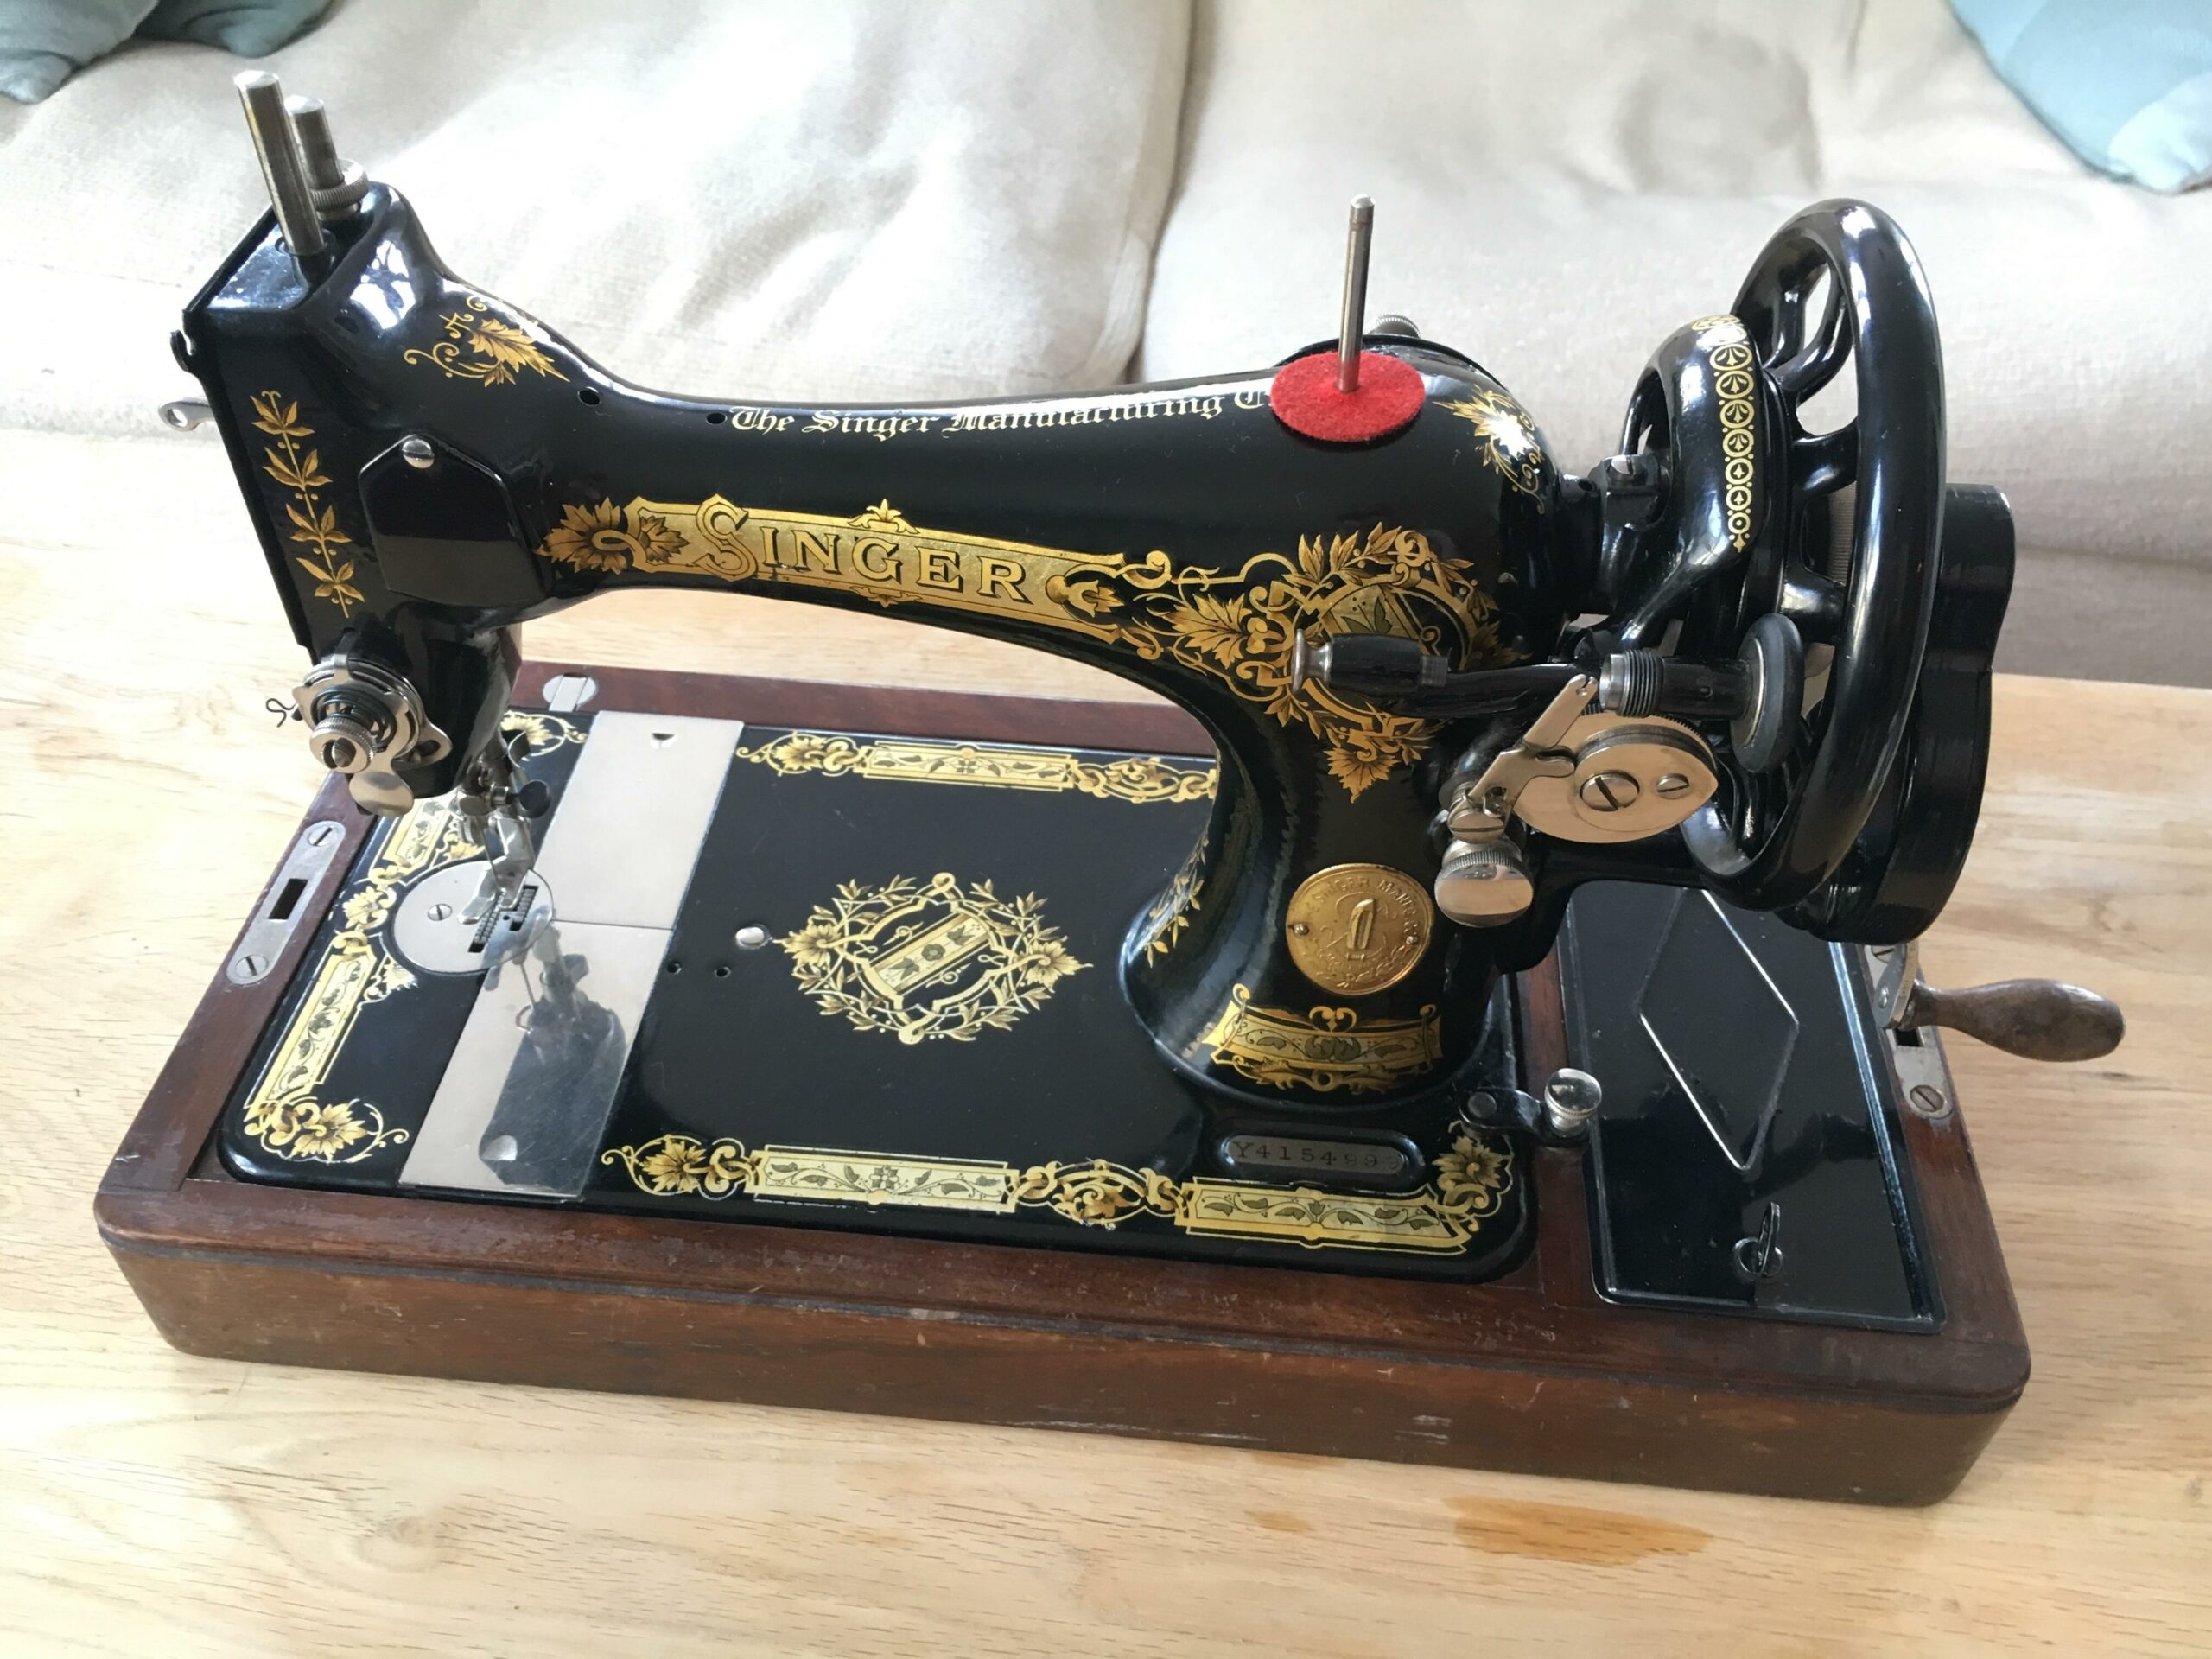 antique Singer sewing machine